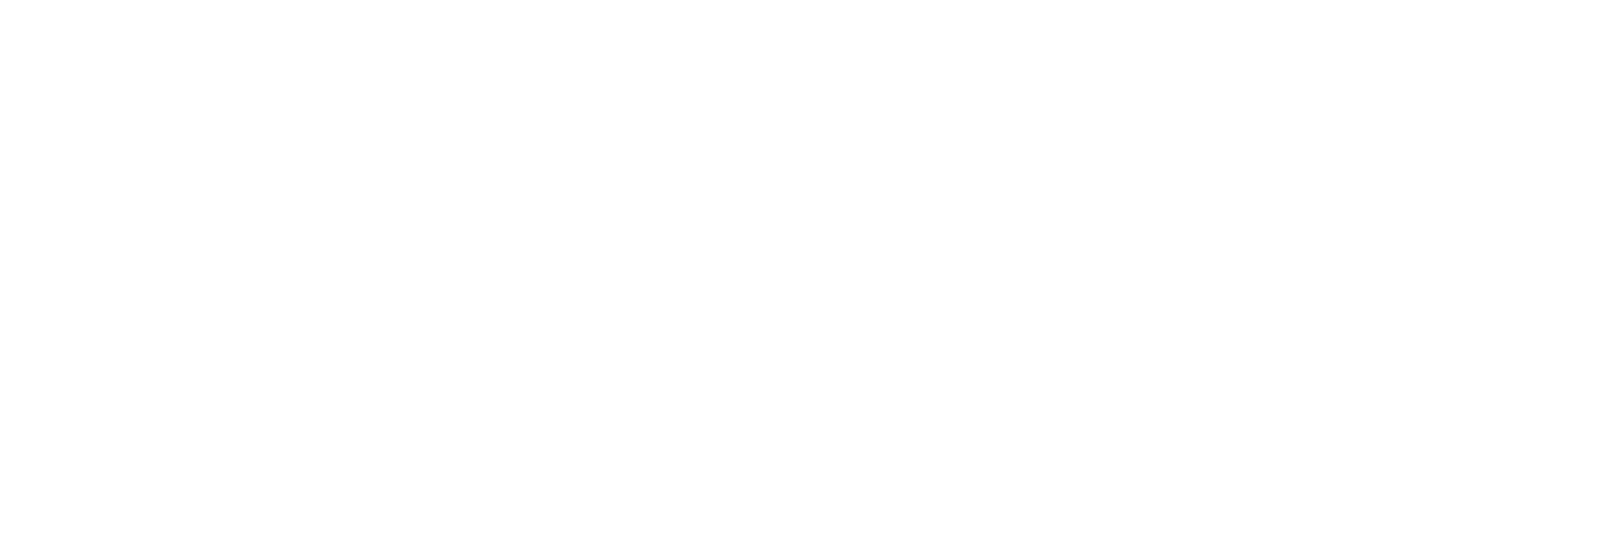 World Economic, Environmental & Social Development S.A.